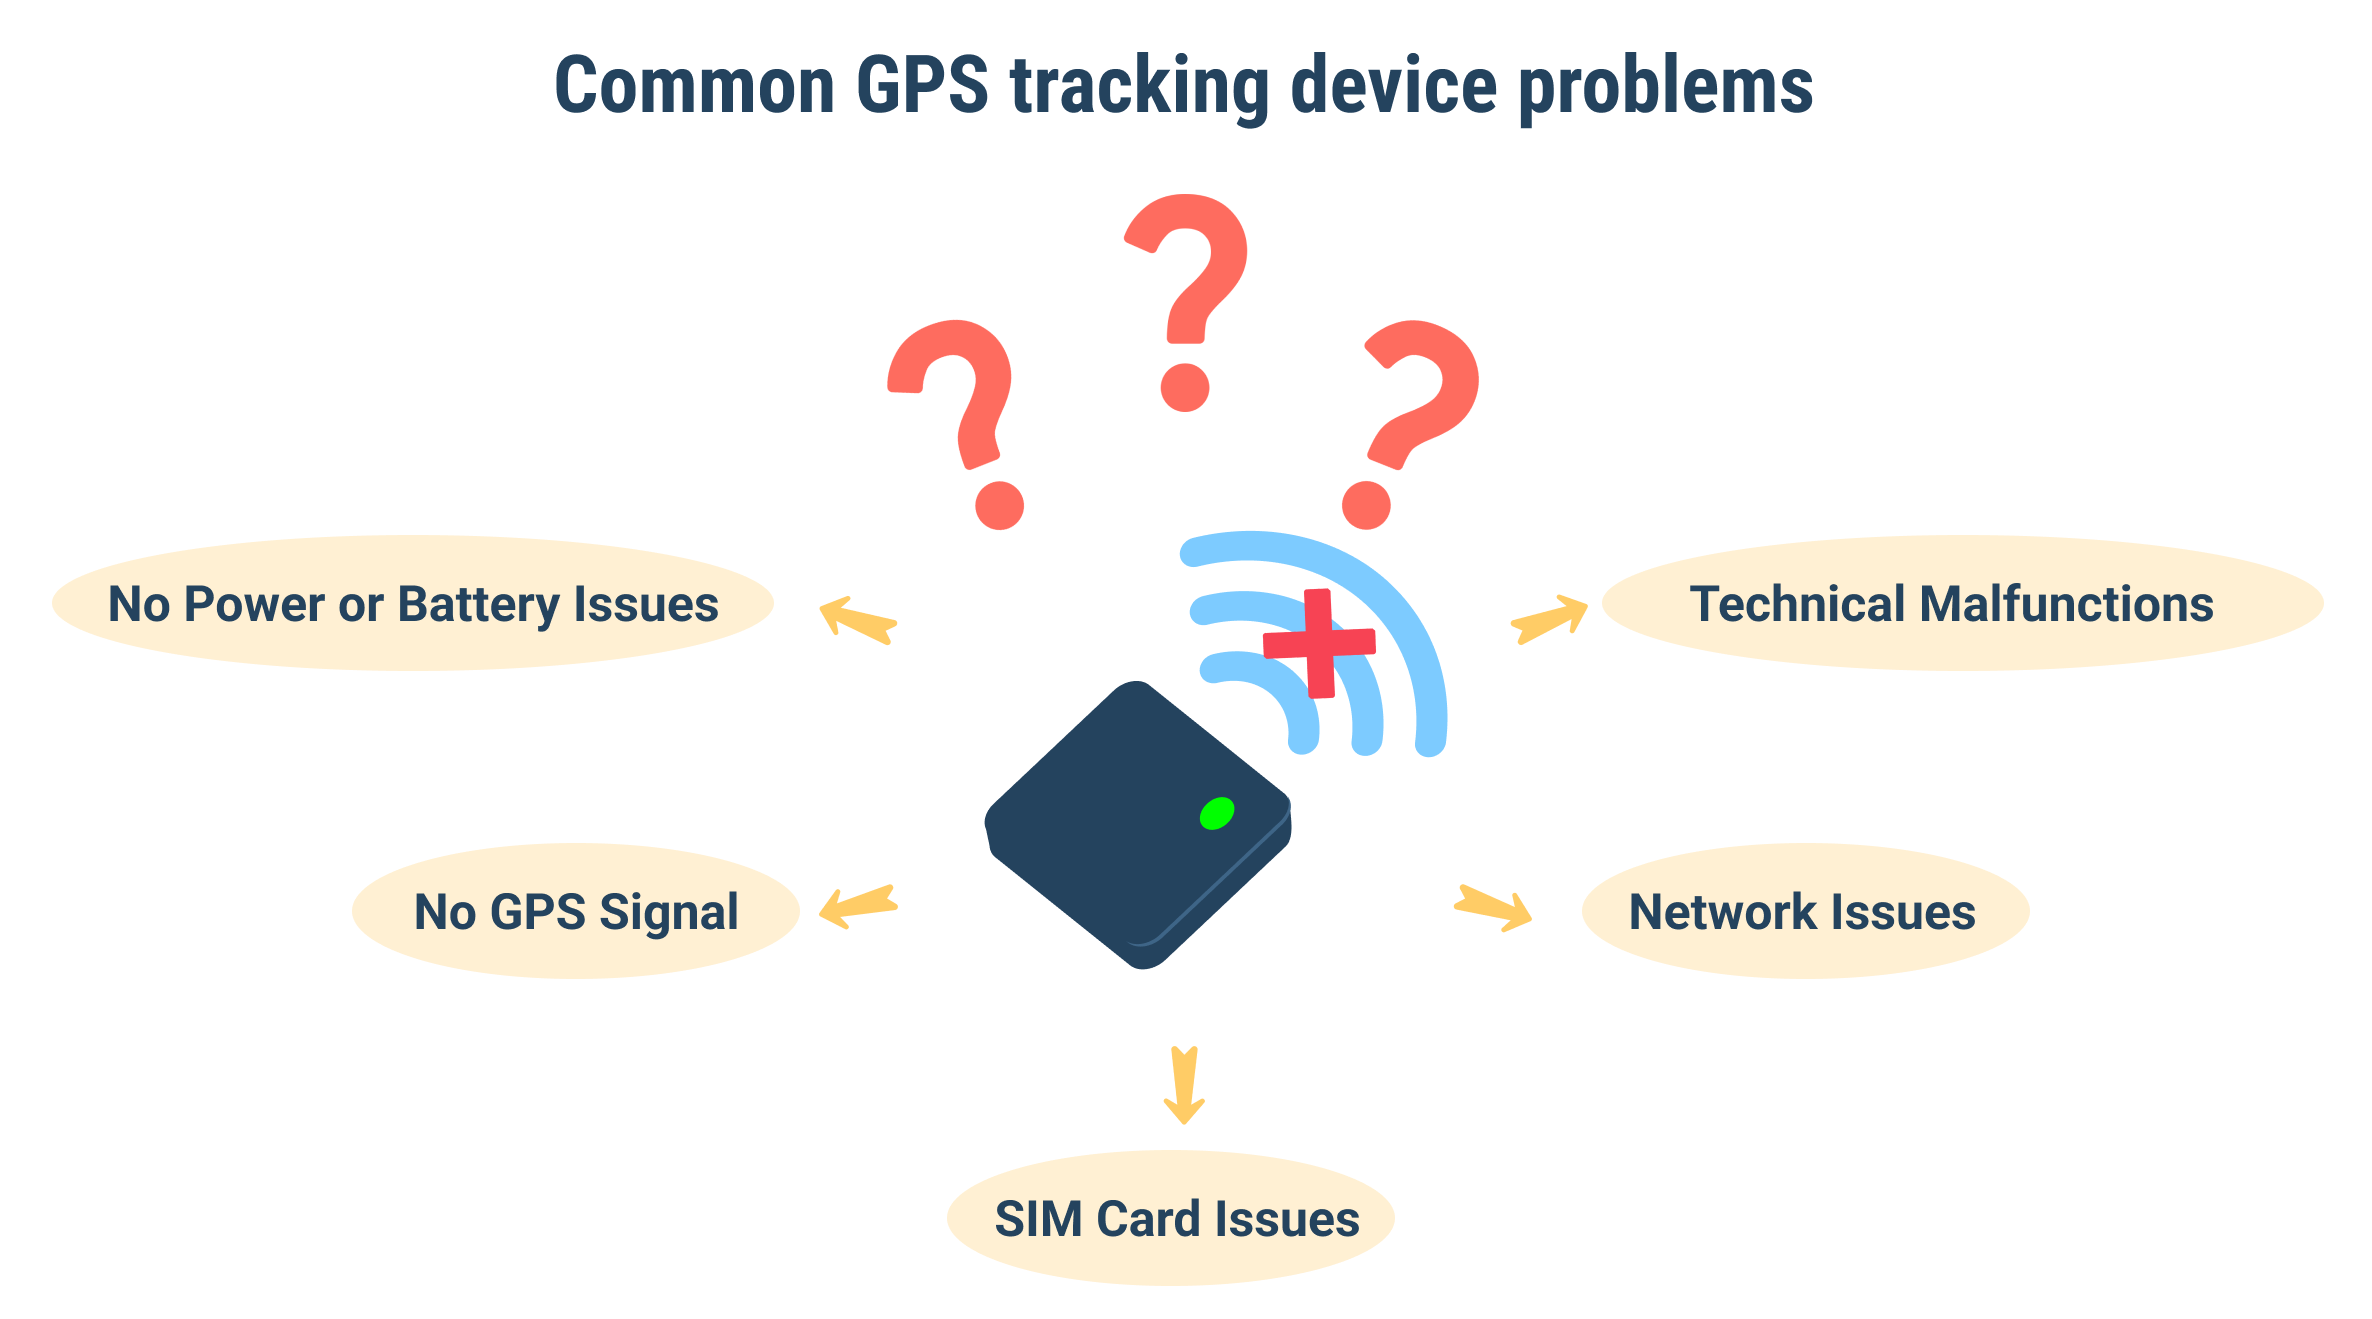 Problemas comuns do dispositivo de rastreamento por GPS